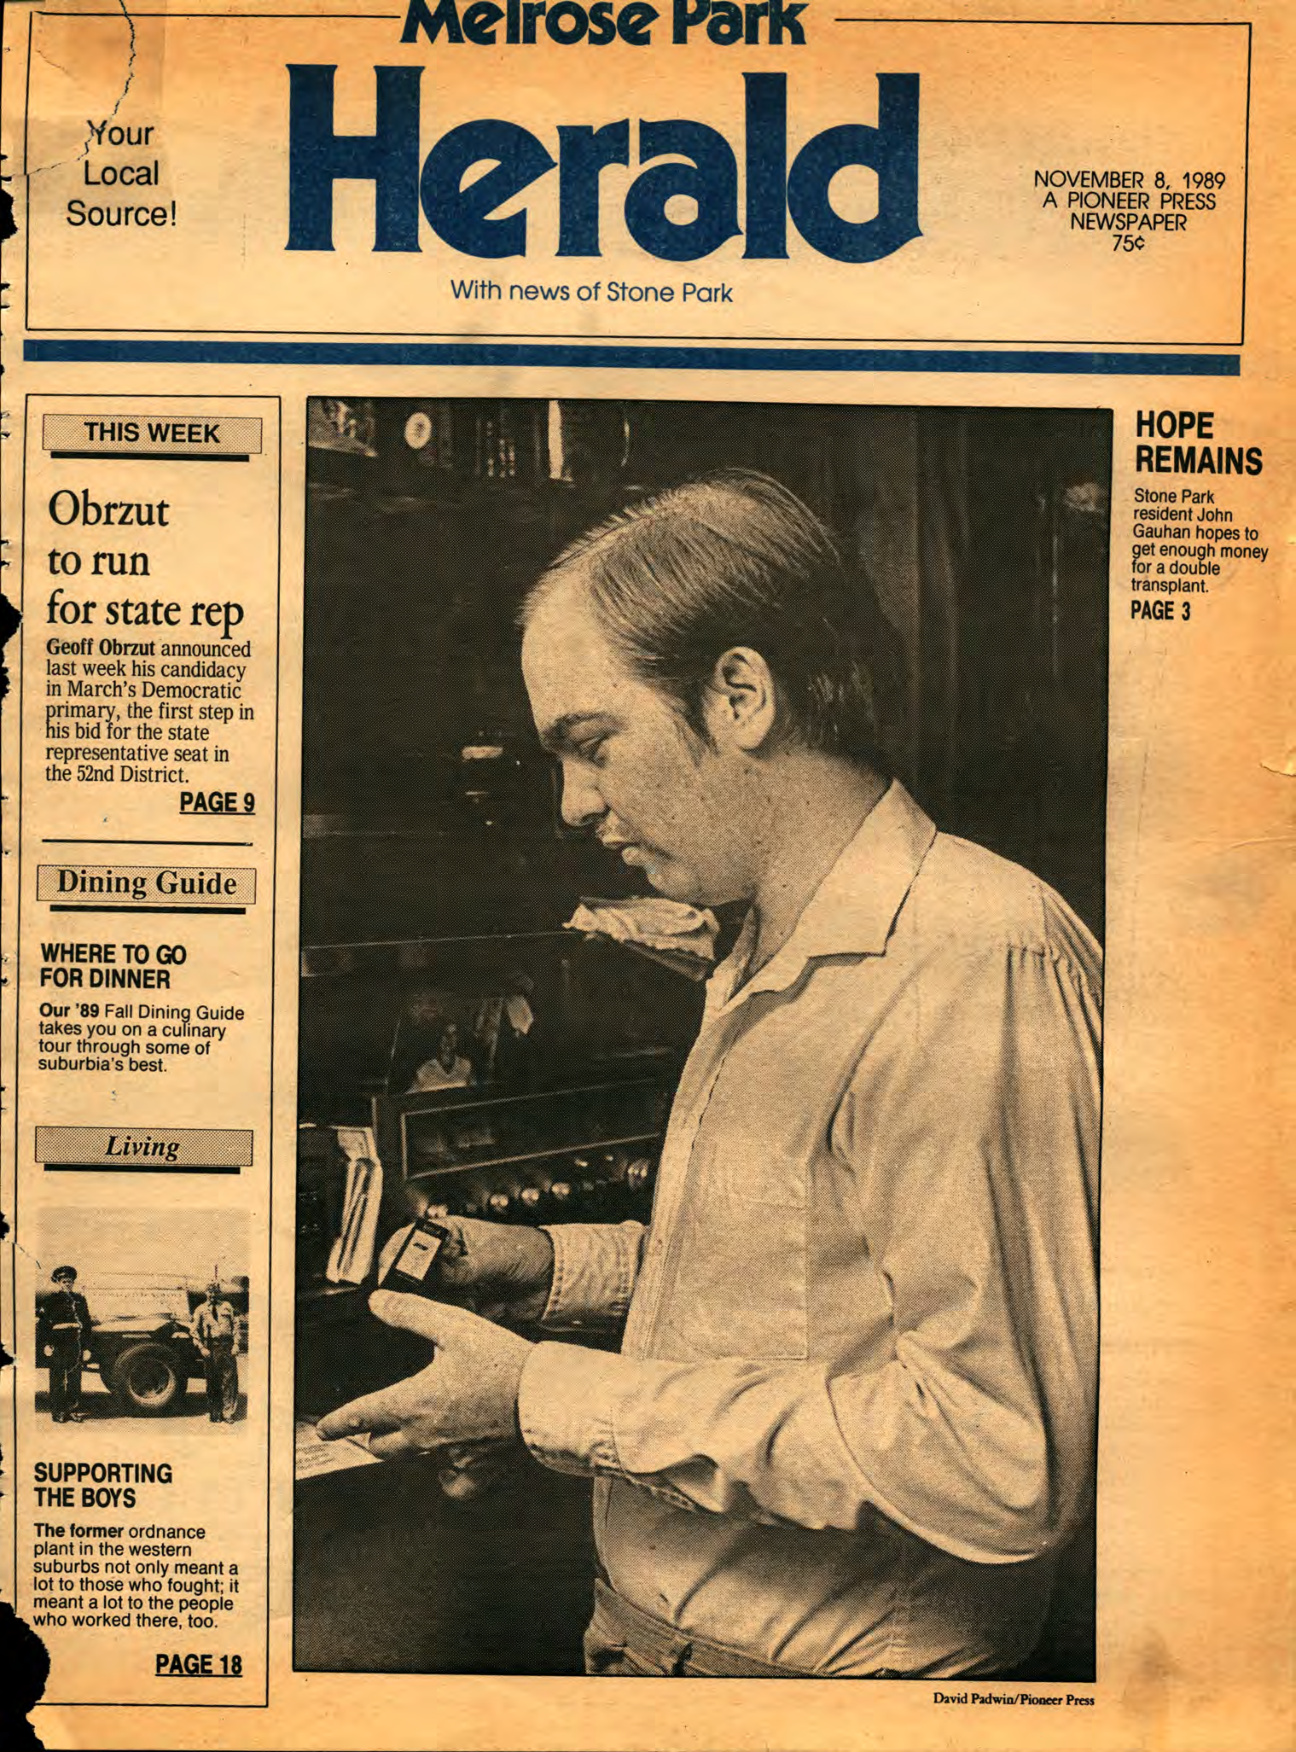 The Herald – 19891108